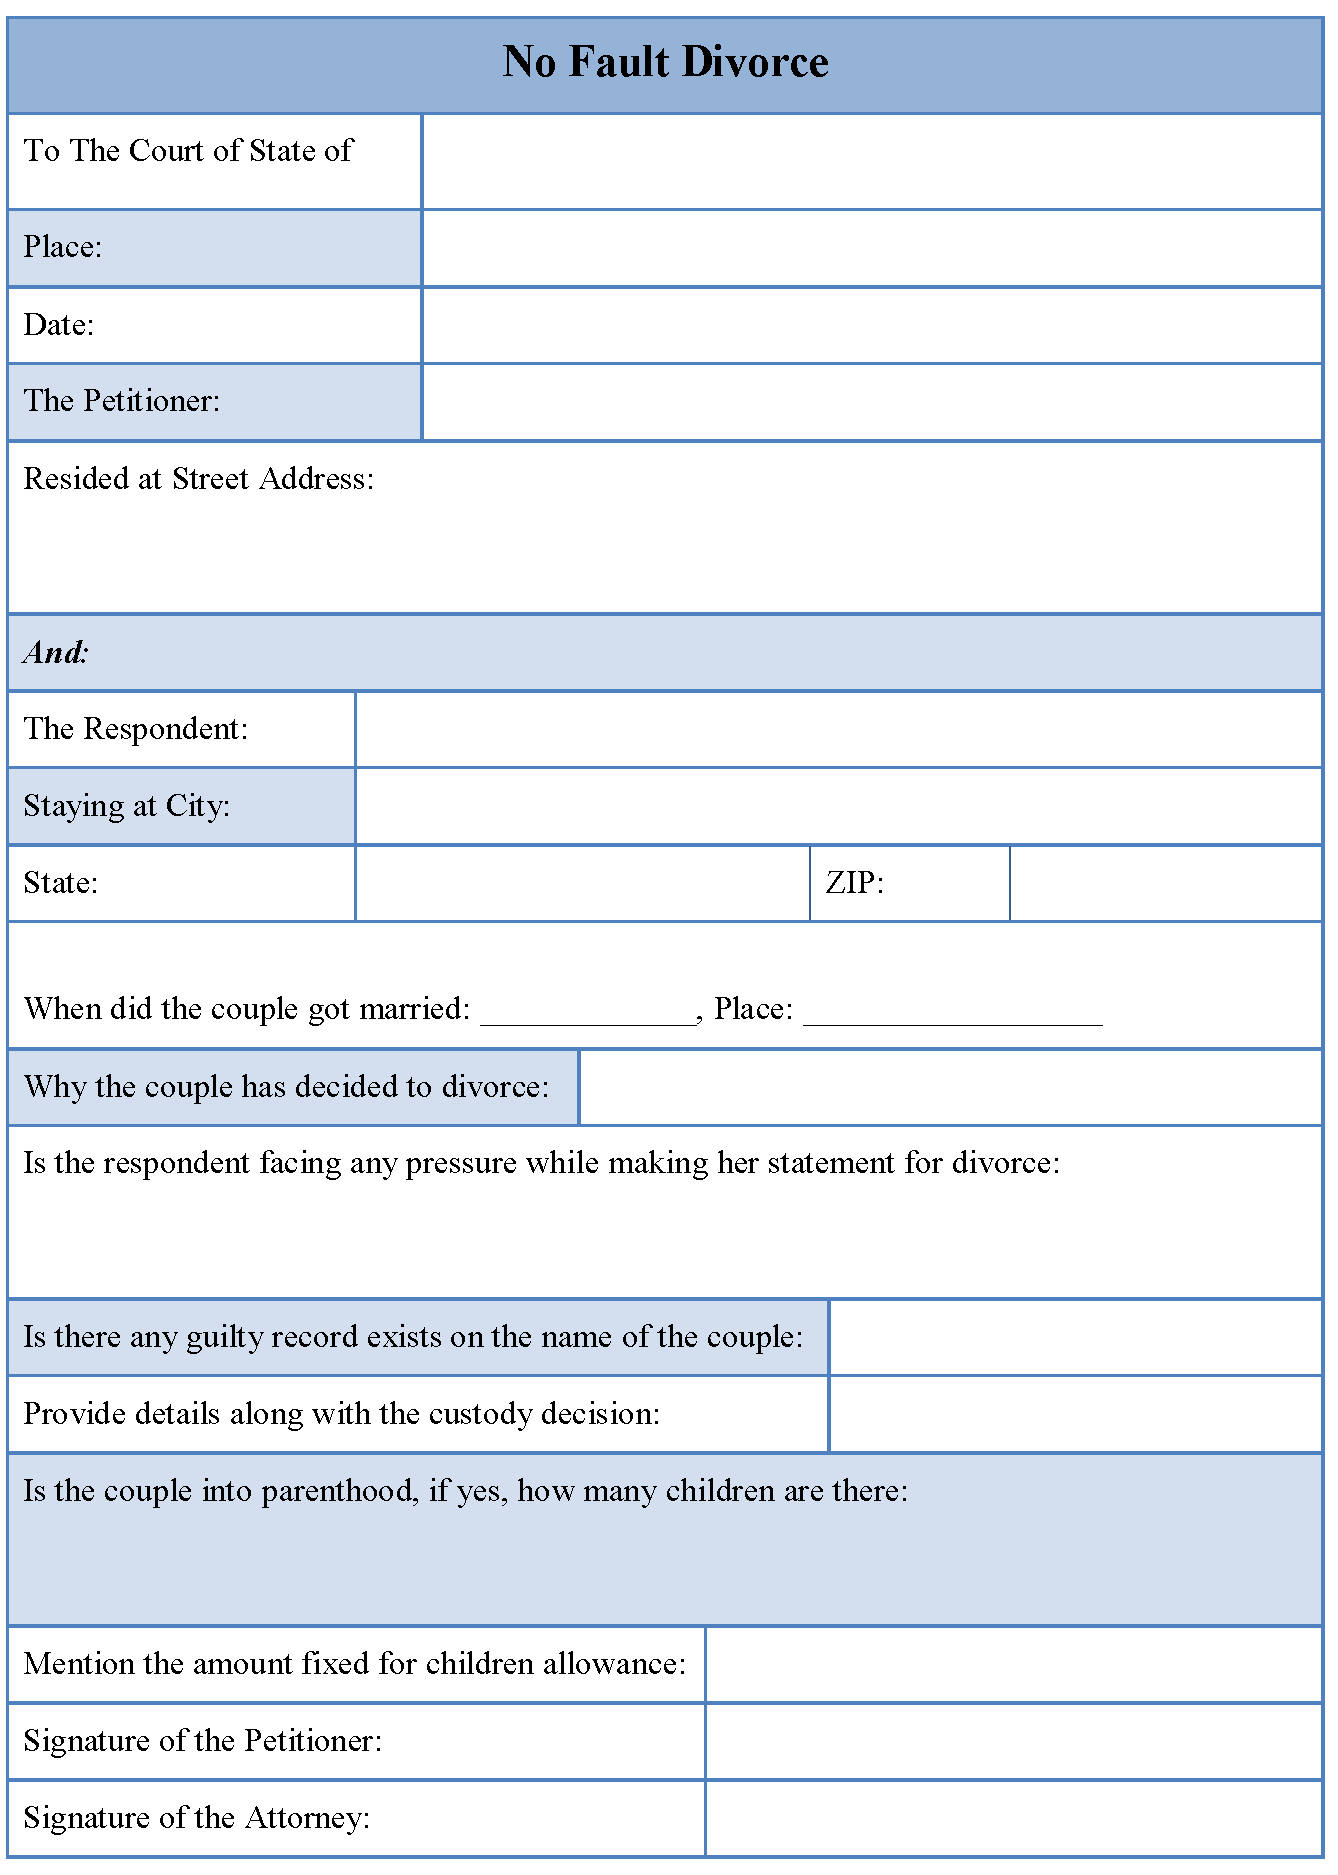 No Fault Divorce Form Editable Forms